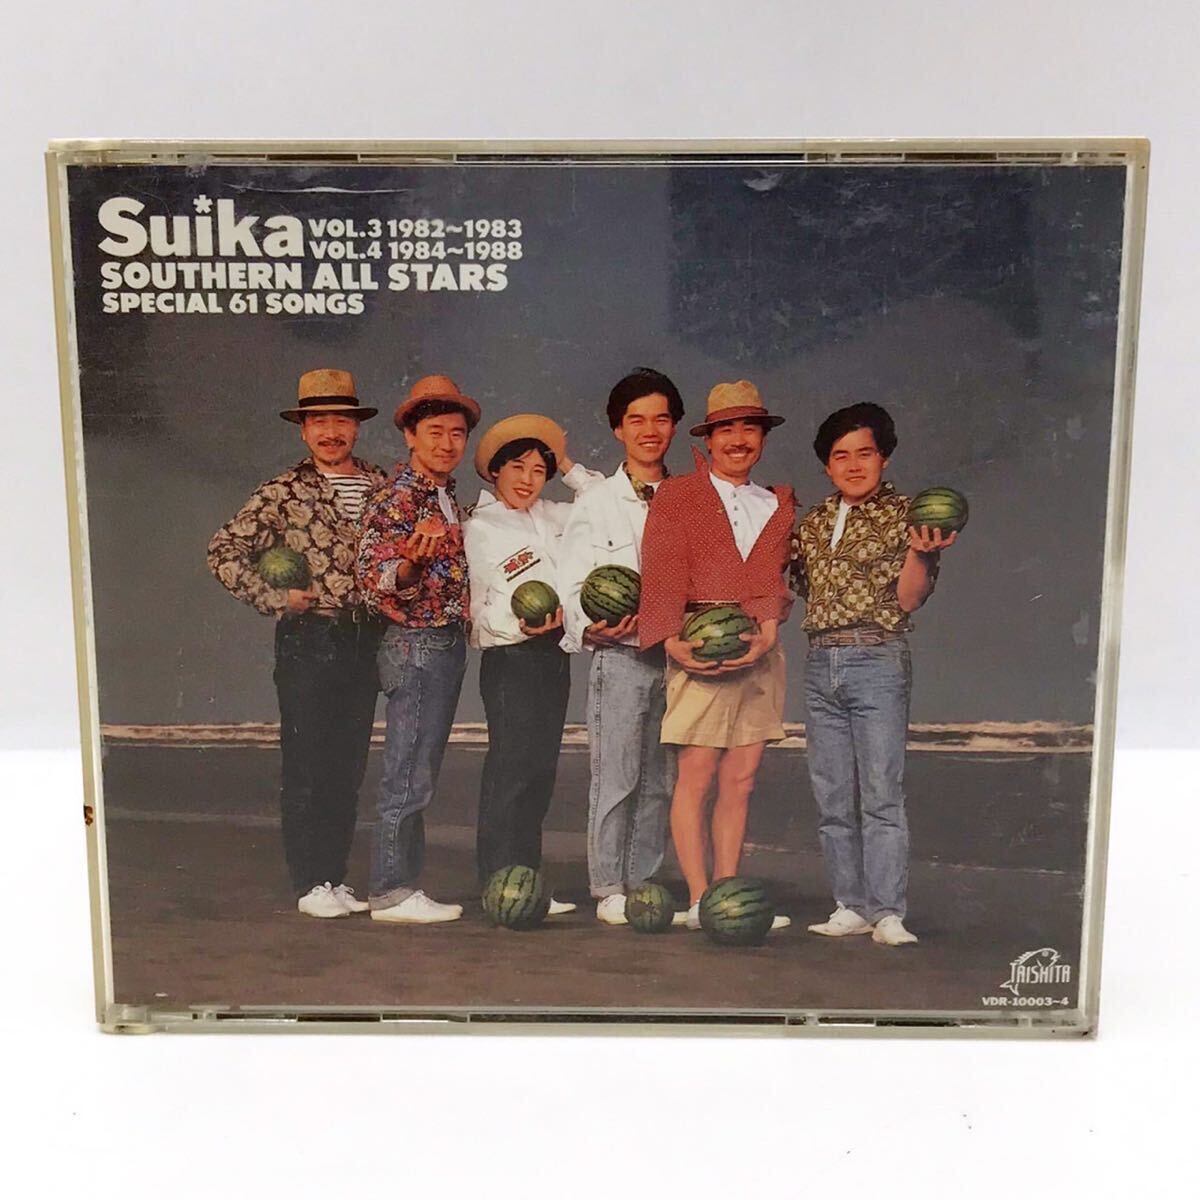  Southern All Stars Suika SOUTHERN ALL STARS SPECIAL 61 SONGS альбом sa The n тутовик рисовое поле ..... ограничение в жестяной банке 4CD[NK6037]